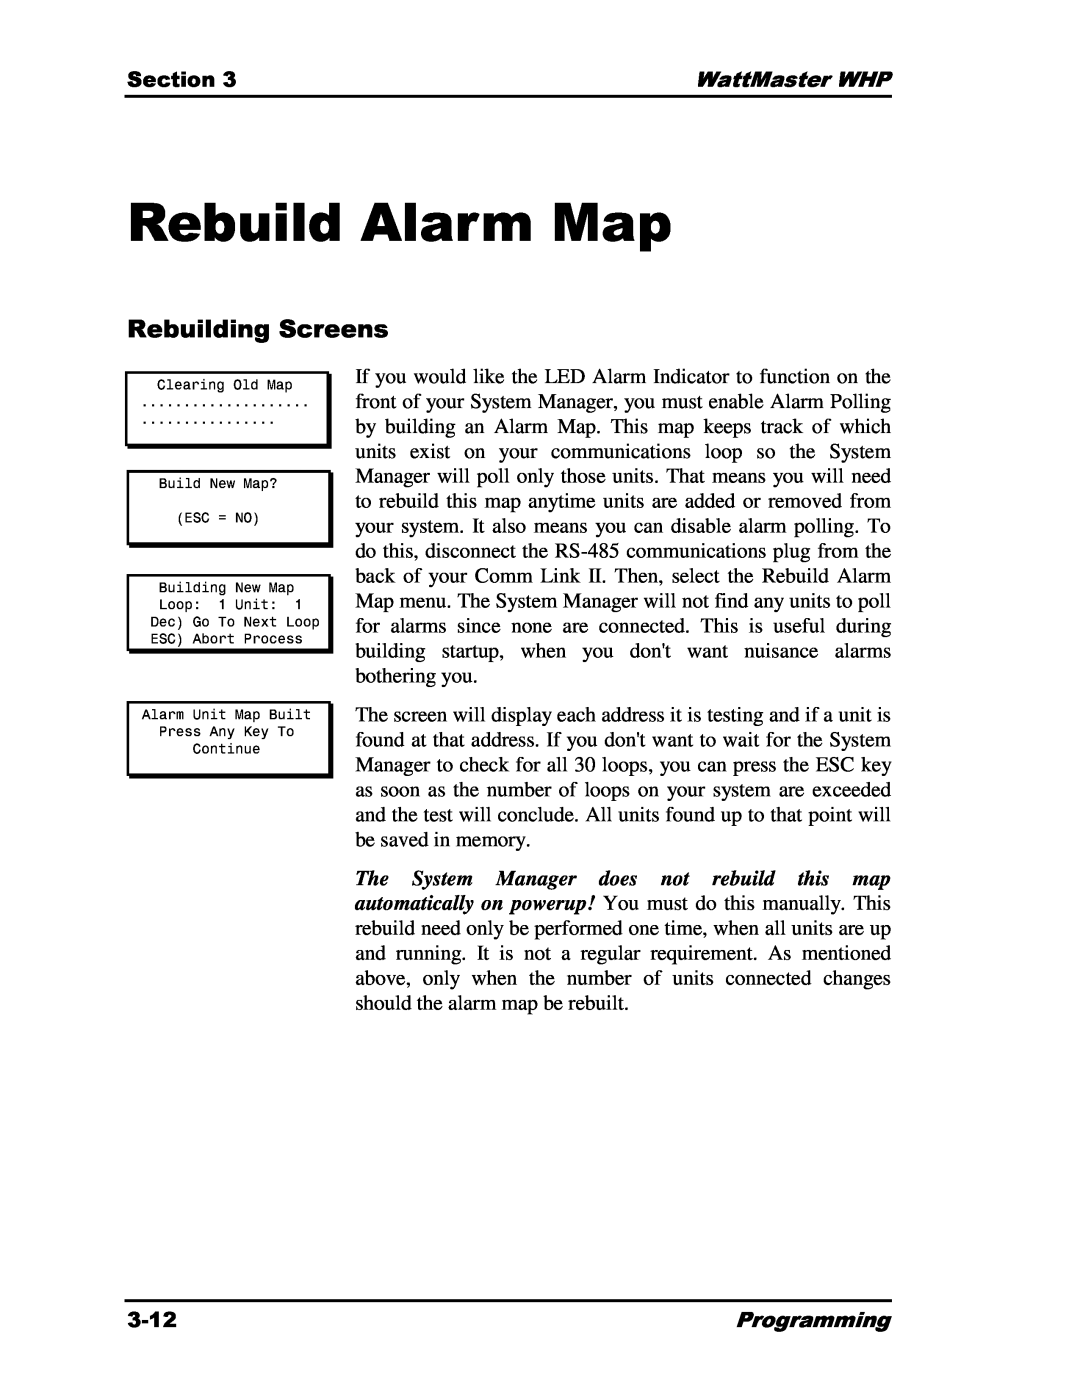 Heat Controller Water Source Heat Pump manual Rebuild Alarm Map, ClearingBuildESCNew=OldNewMap?OMap 